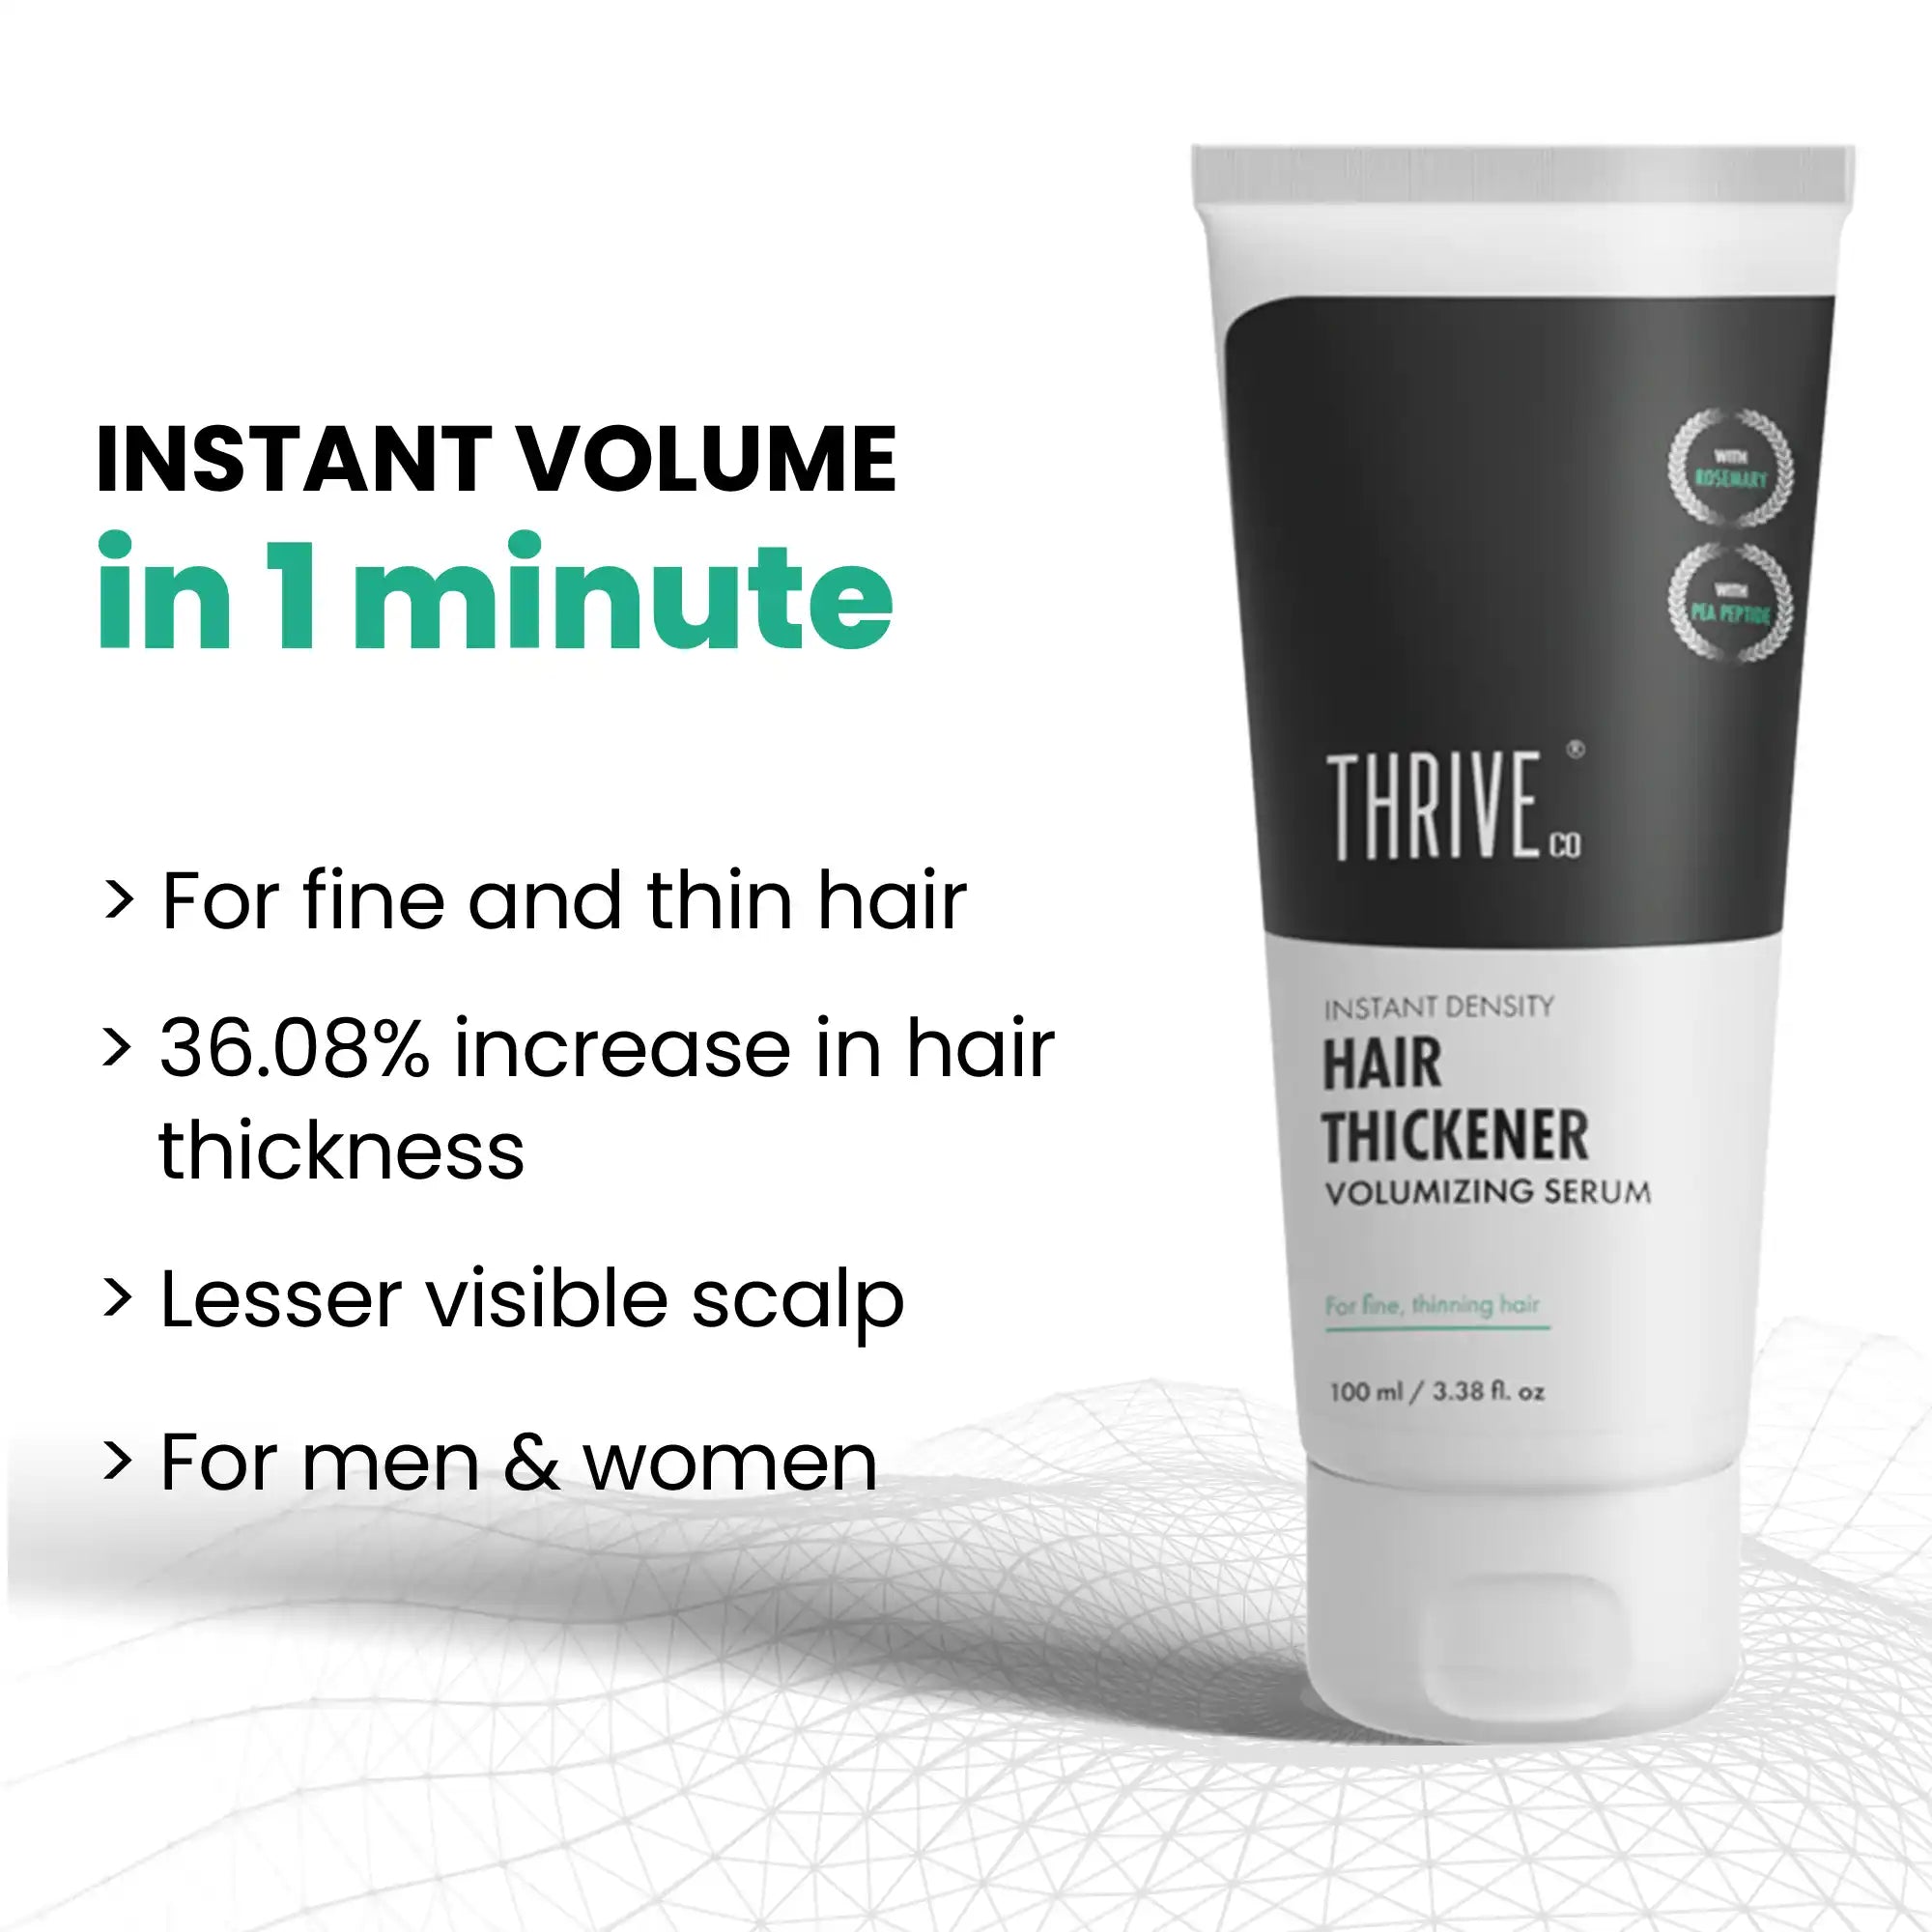 thriveco hair thickener volumizing serum for instant volume